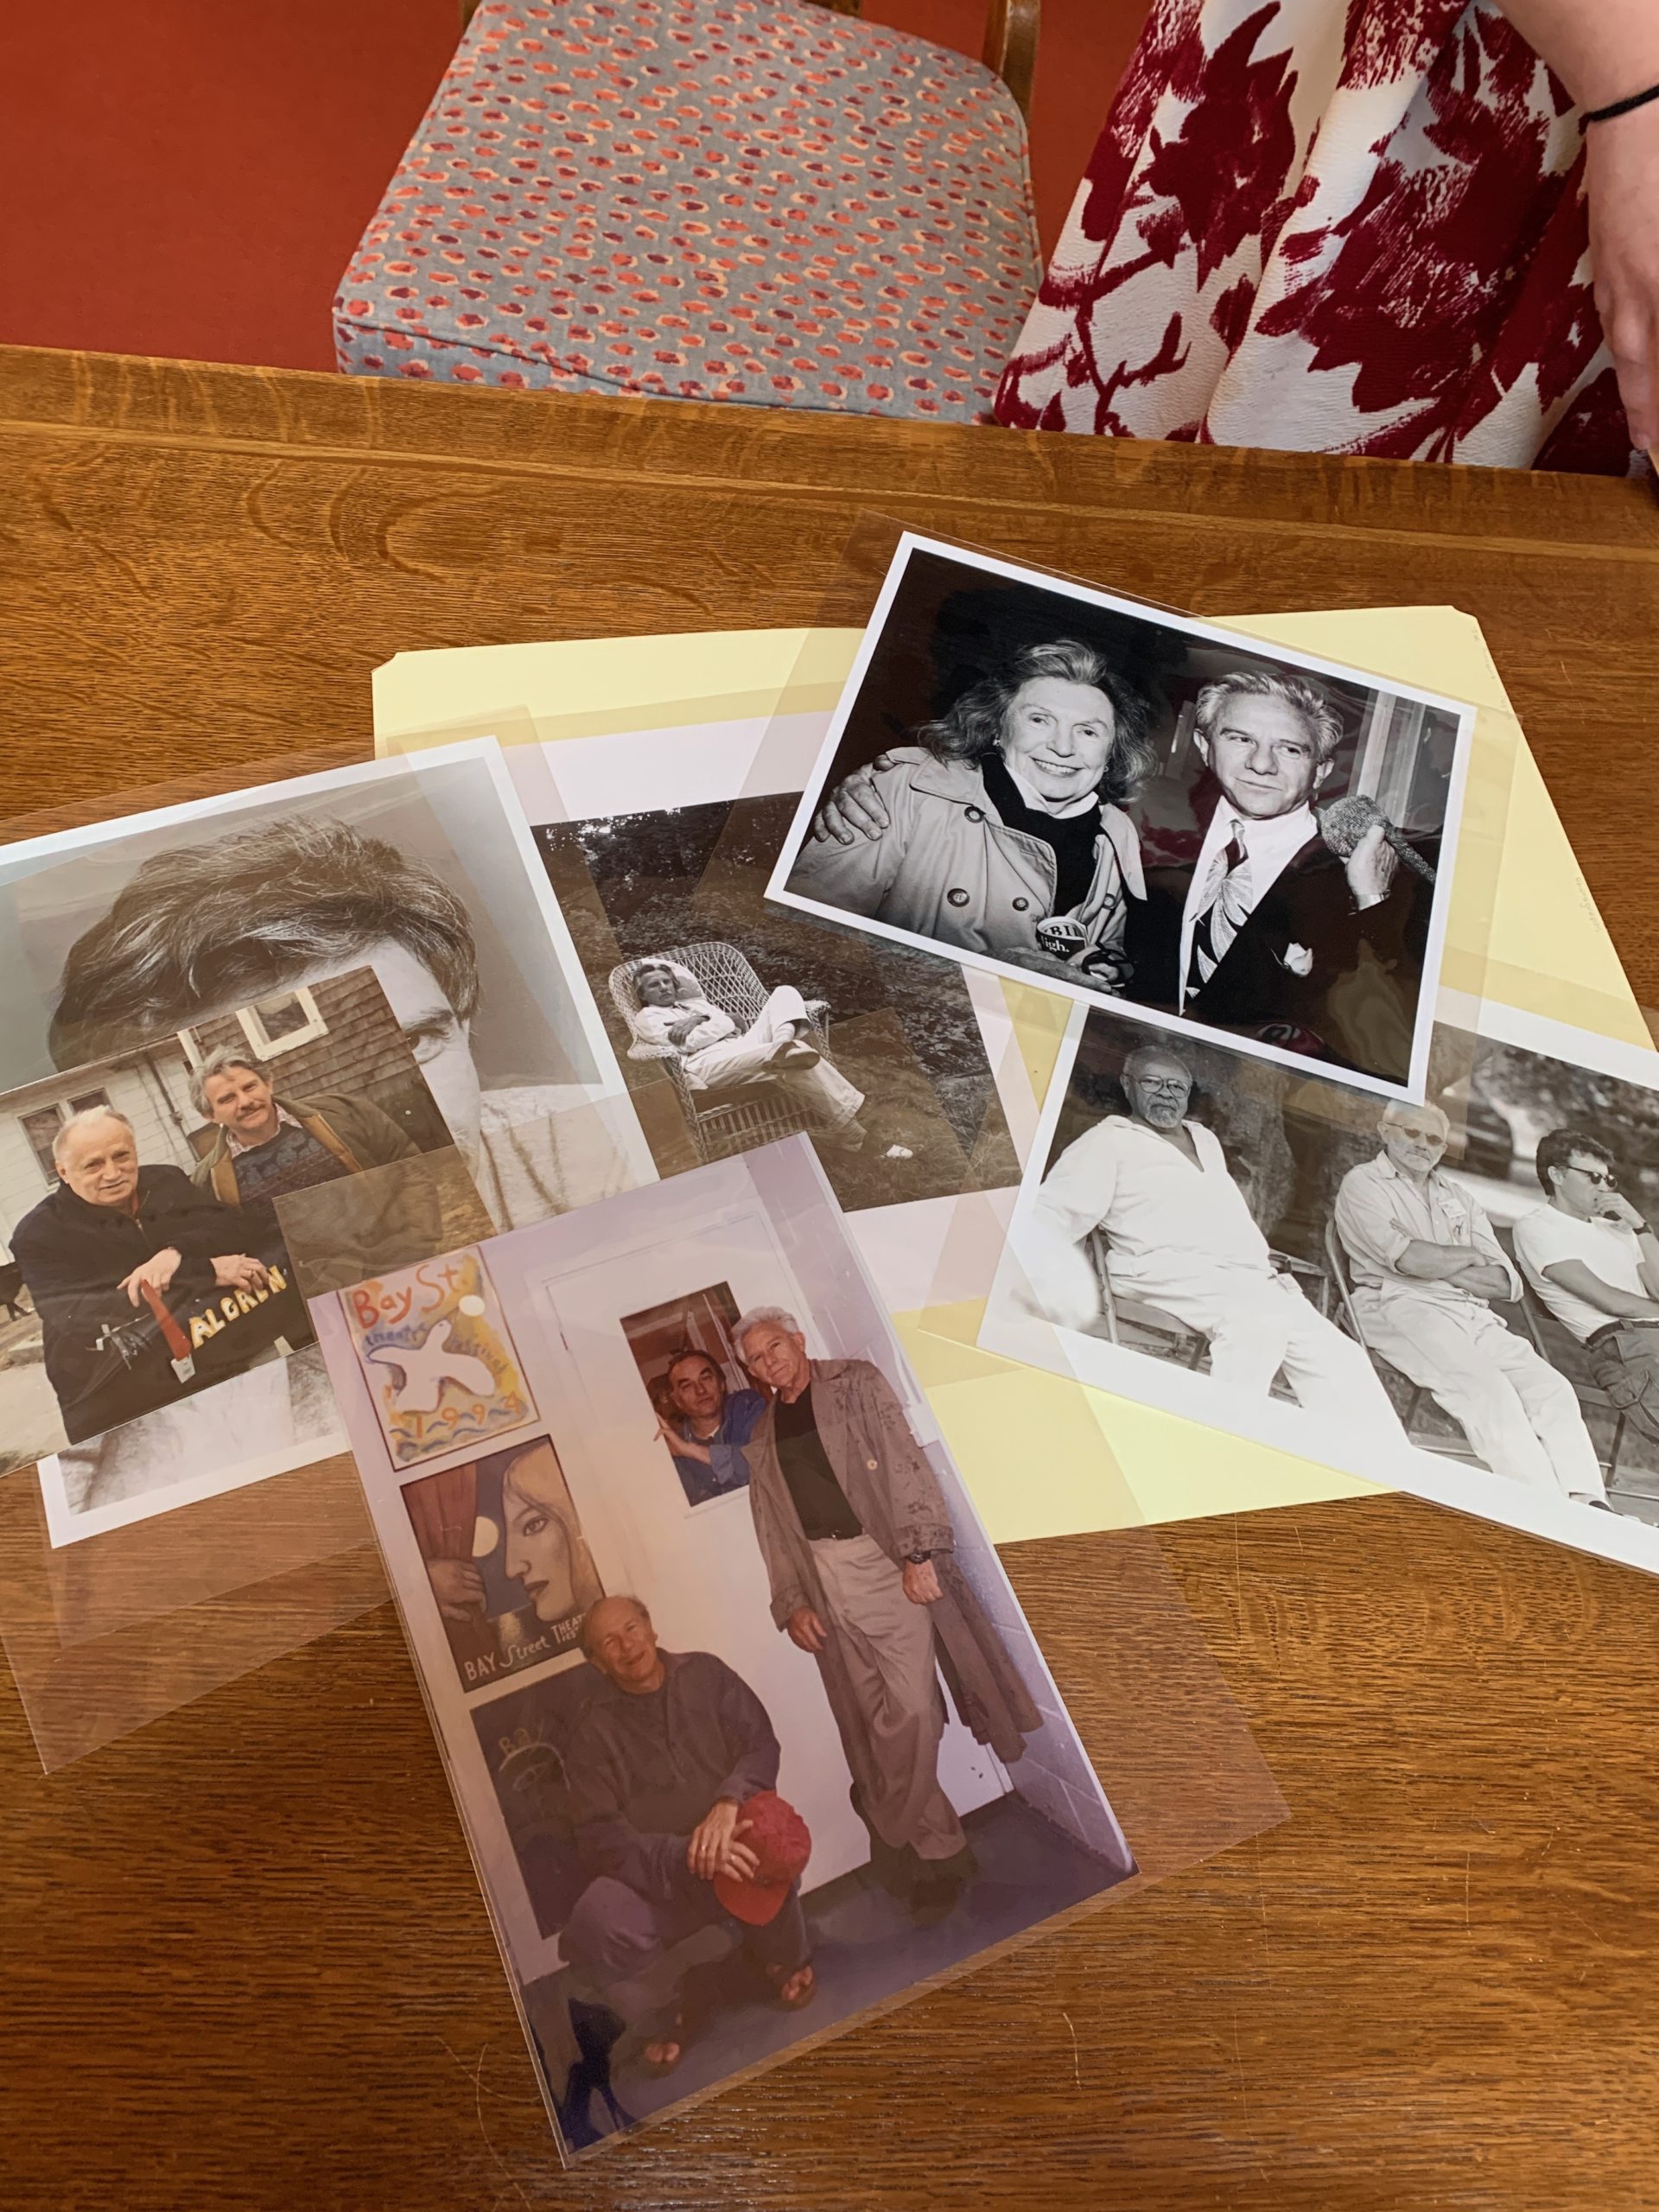 Photos of Joe Pintauro in the collection at John Jermain Memorial Library.